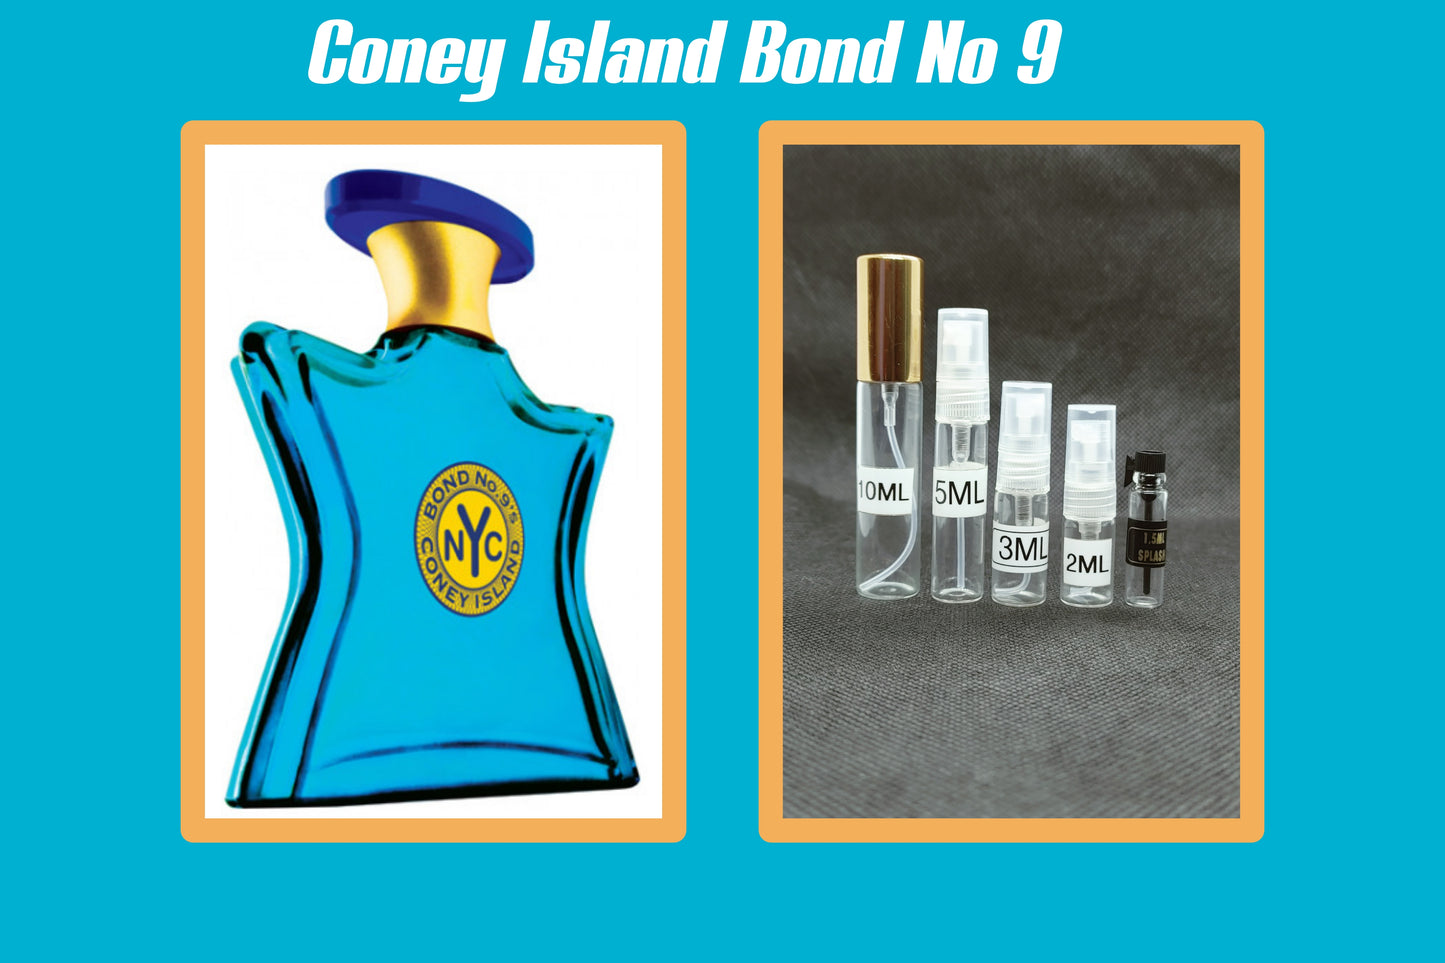 Bond No 9 Coney Island